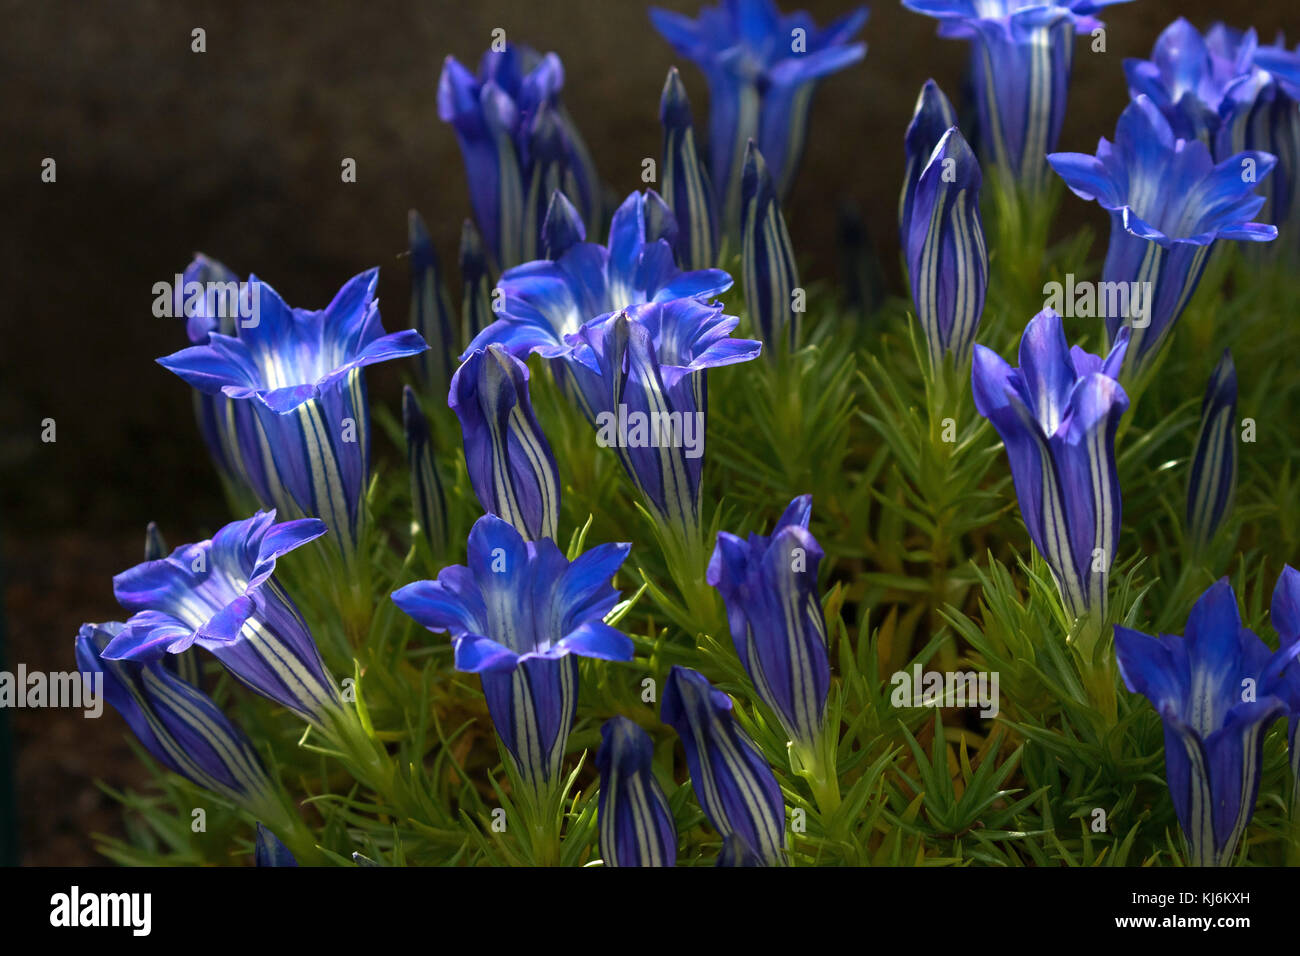 Blau blühenden Gentiana, RHS Gärten, Harlow Carr, Harrogate, North Yorkshire, England, UK. Stockfoto